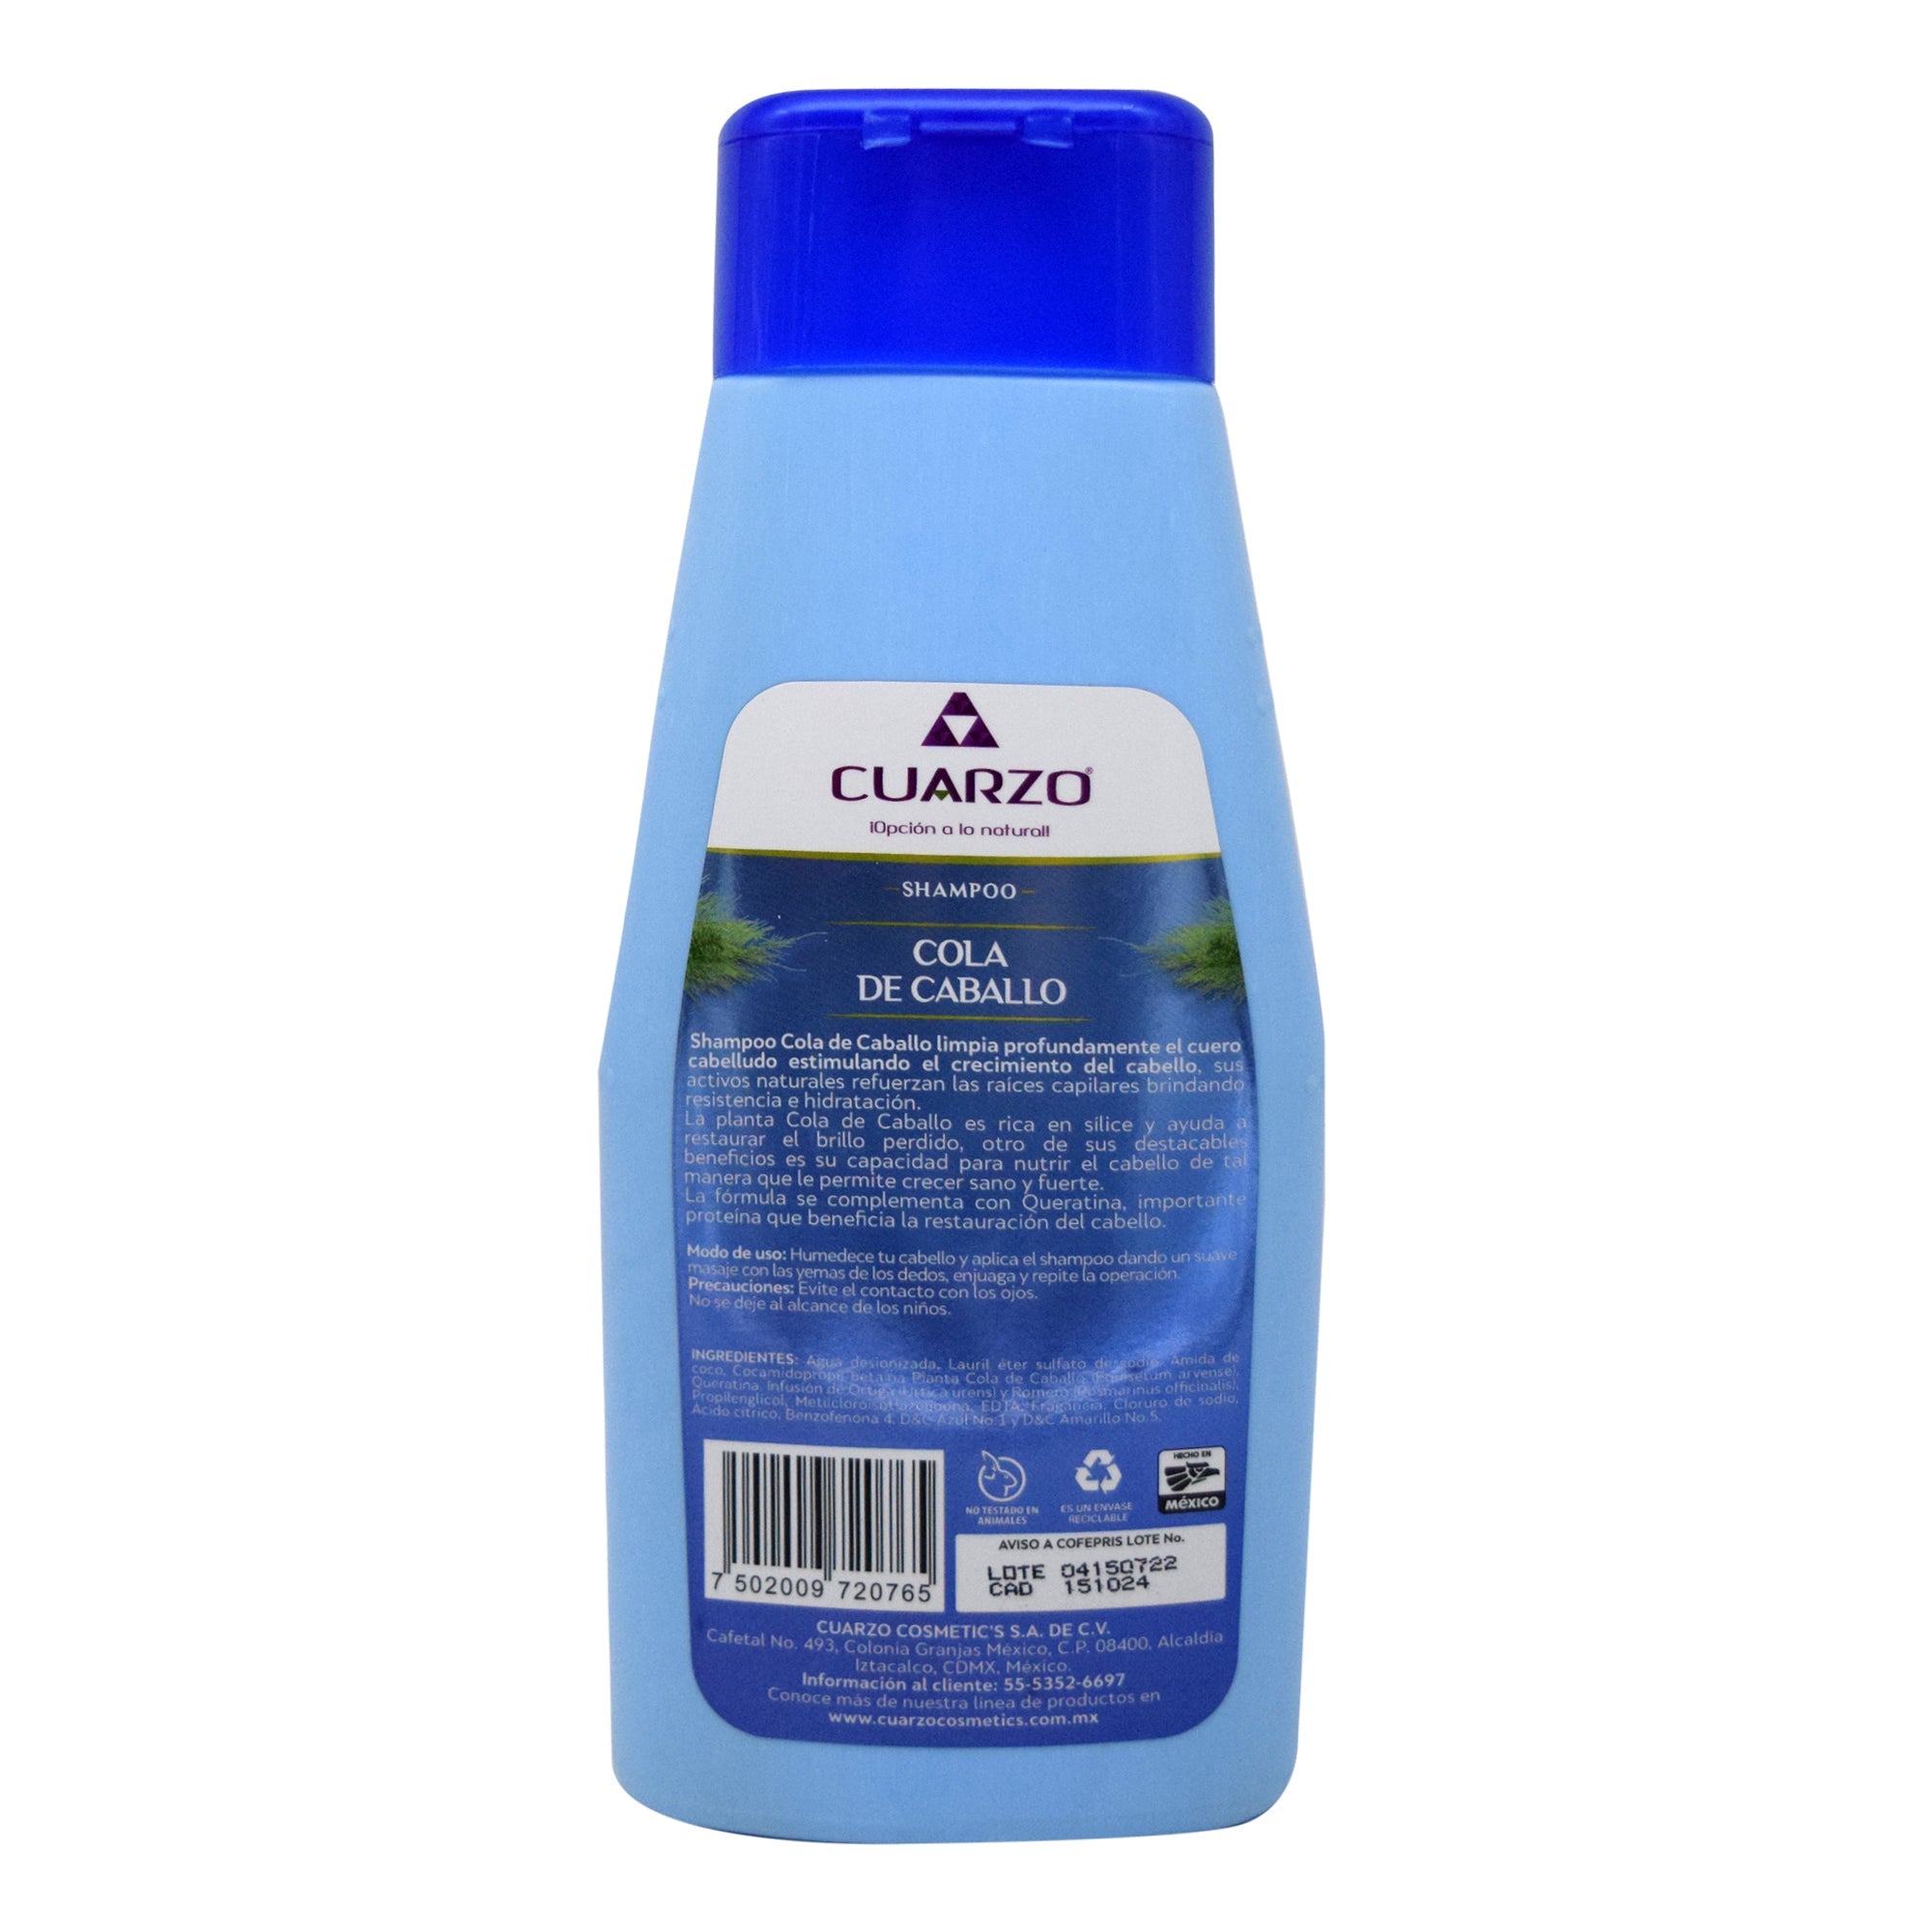 Shampoo cola de caballo 550 ml